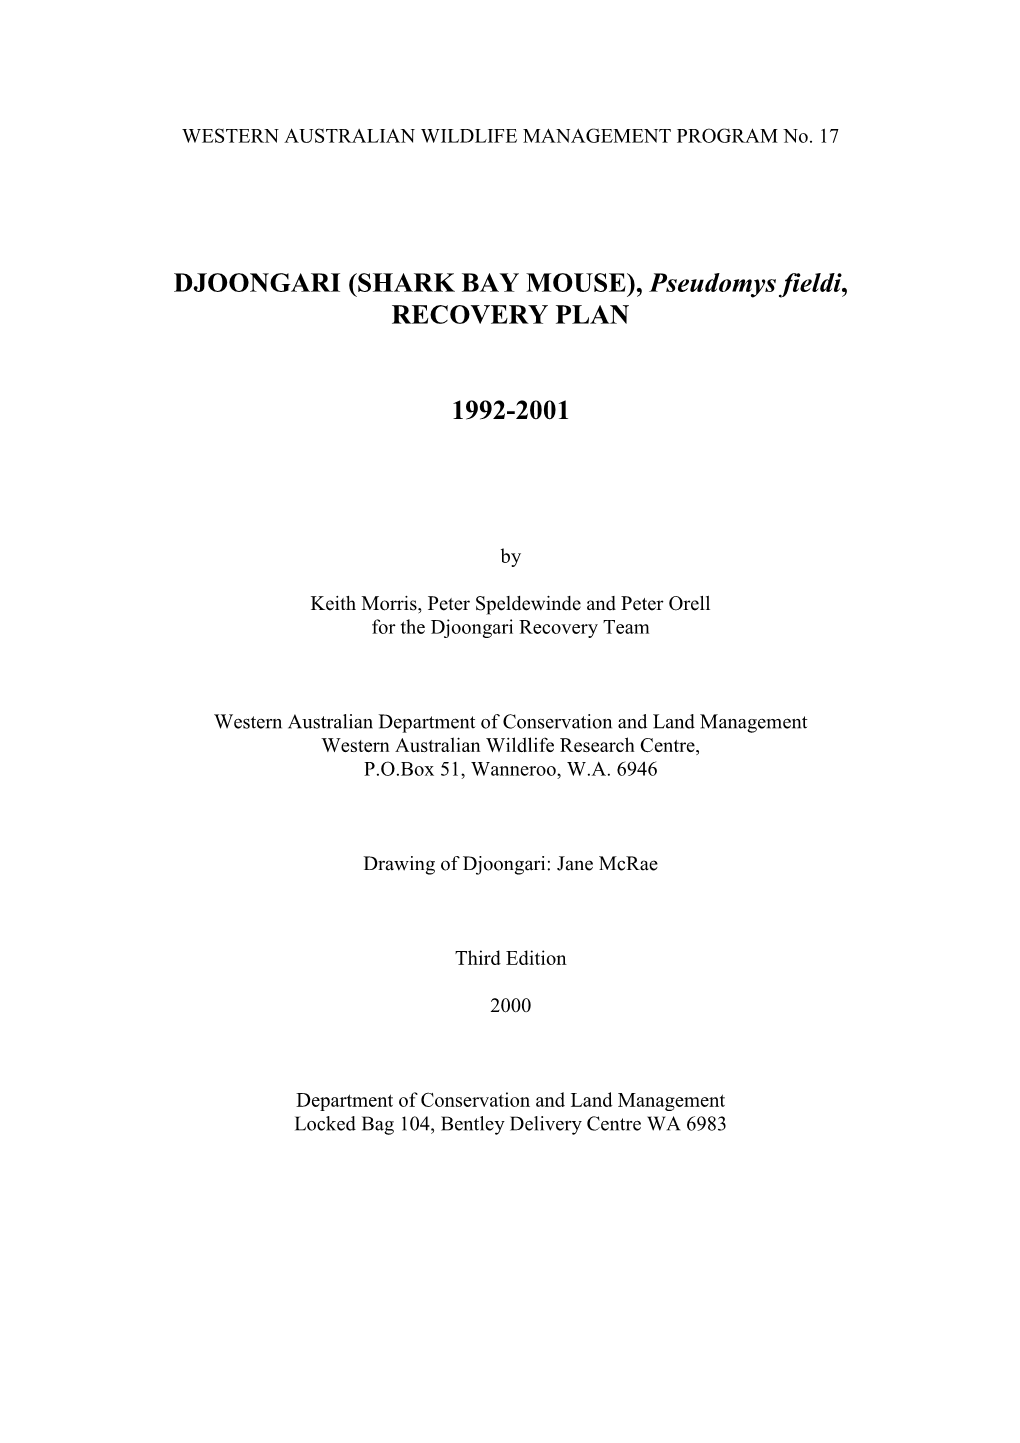 Djoongari (Shark Bay Mouse) Recovery Plan 1992-2001